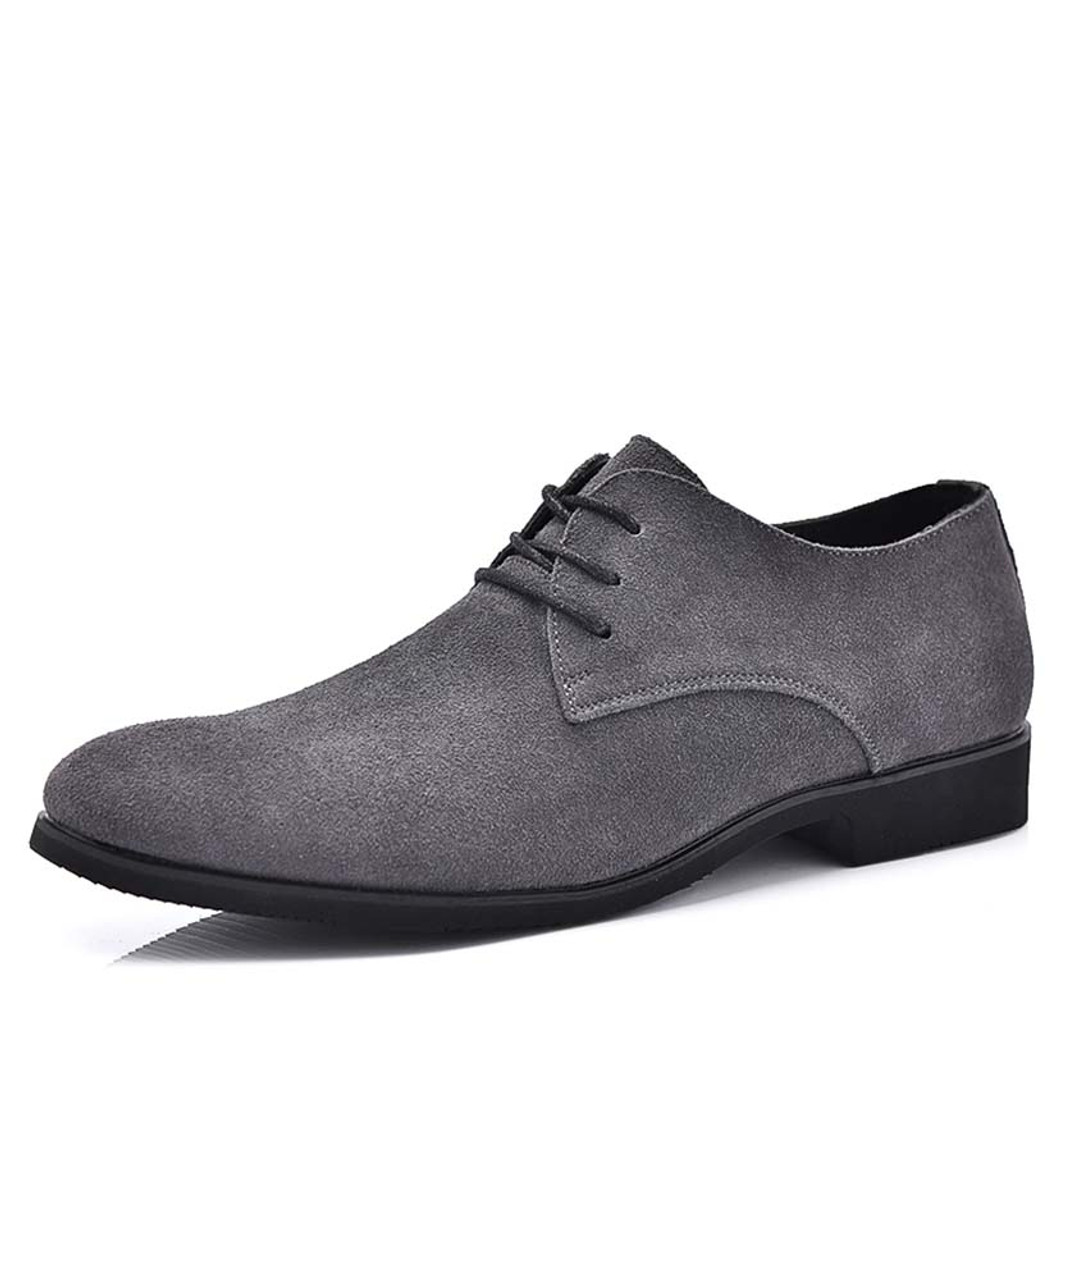 Grey suede leather derby dress shoe 